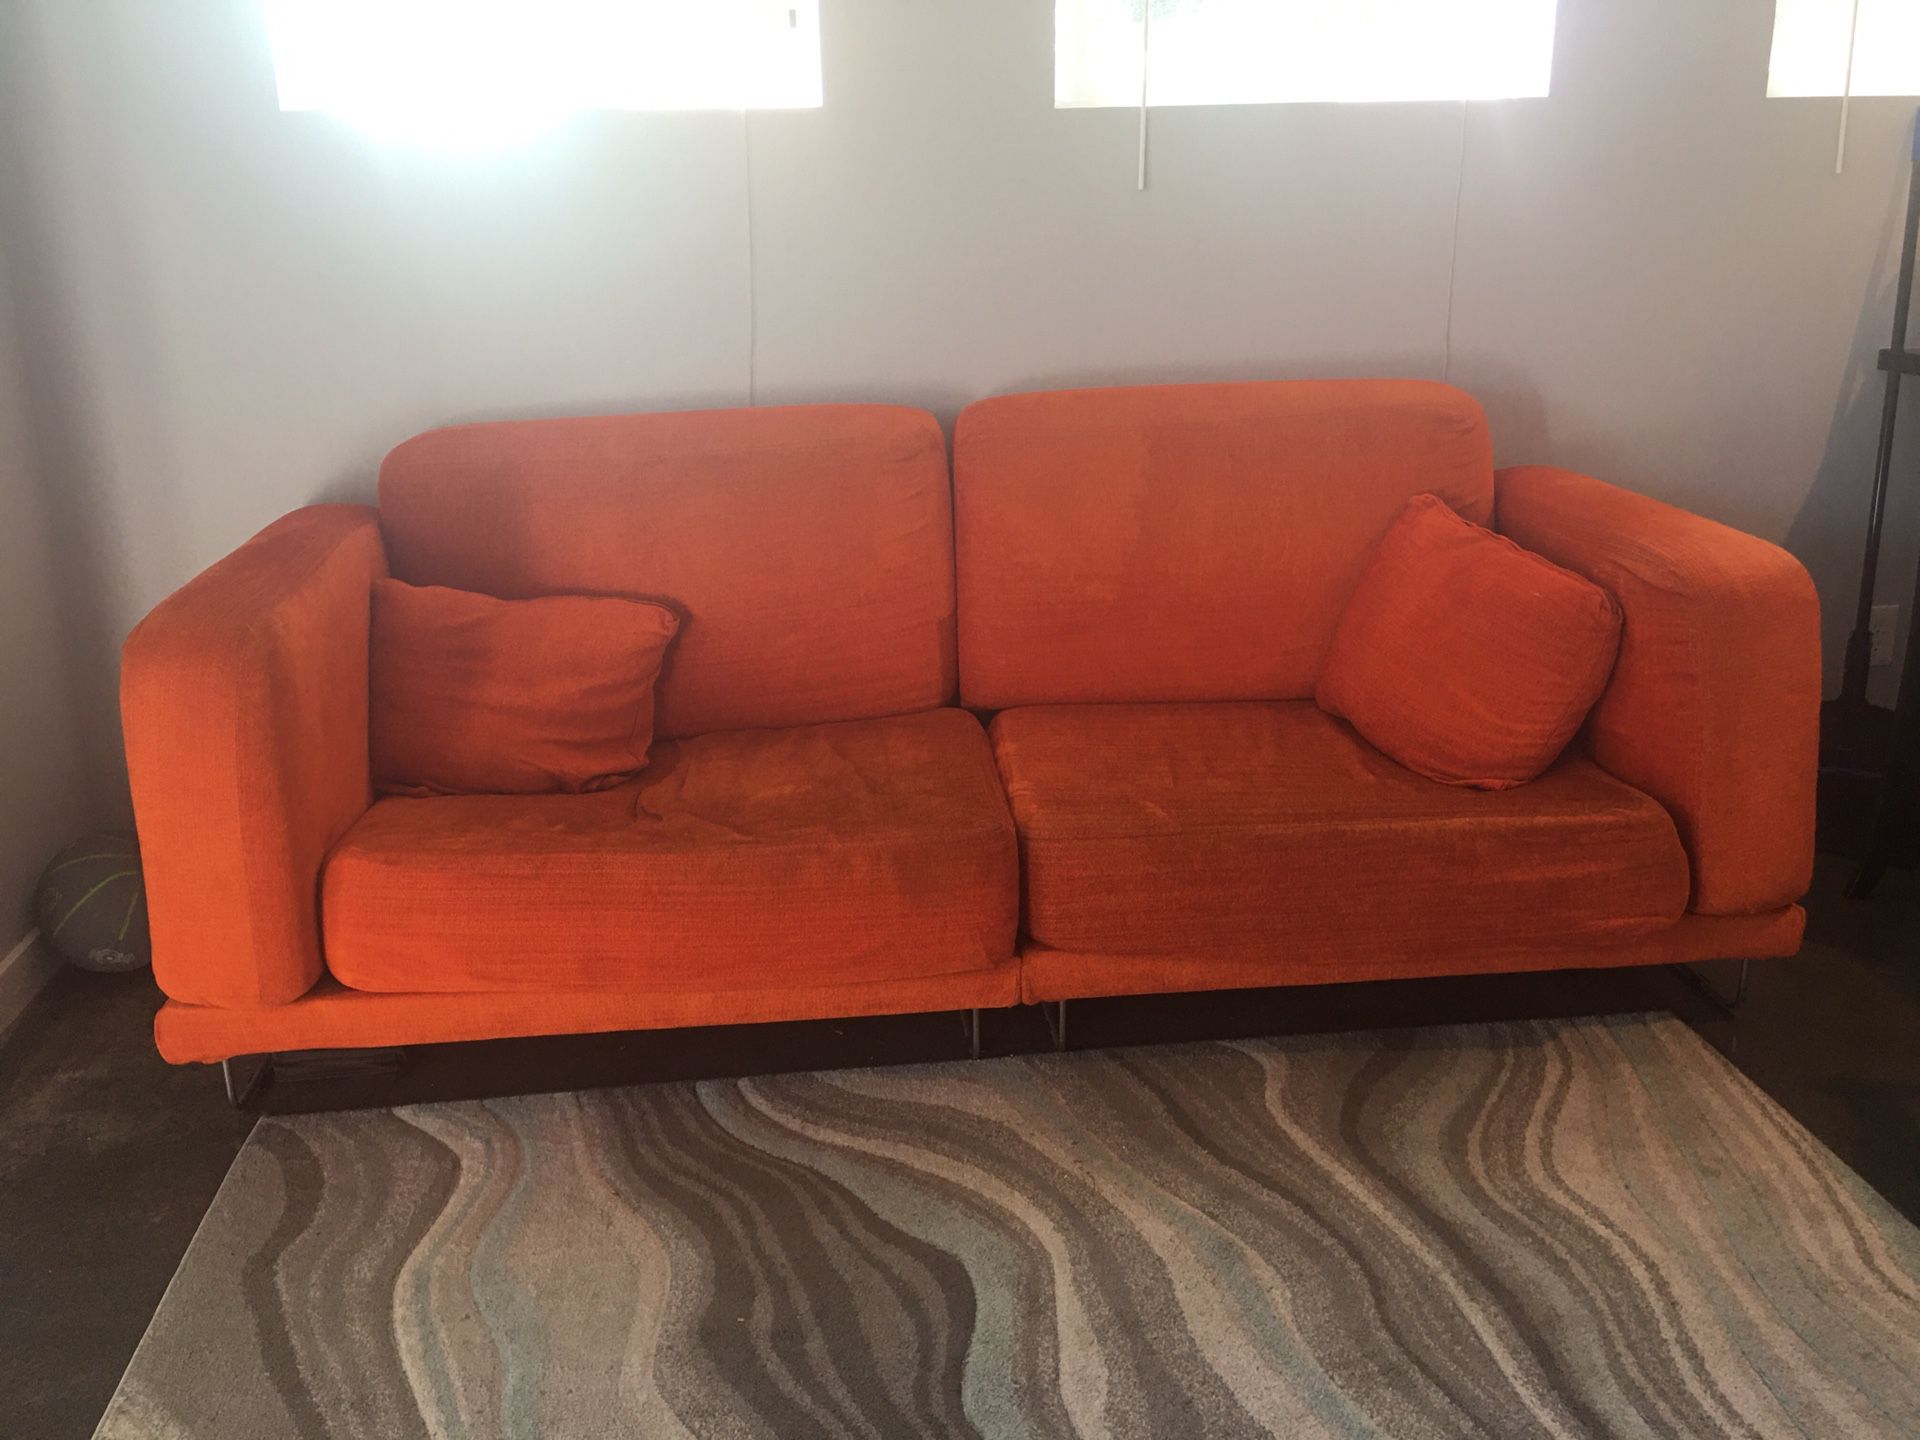 Orange IKEA Couch, smoke and pet free home